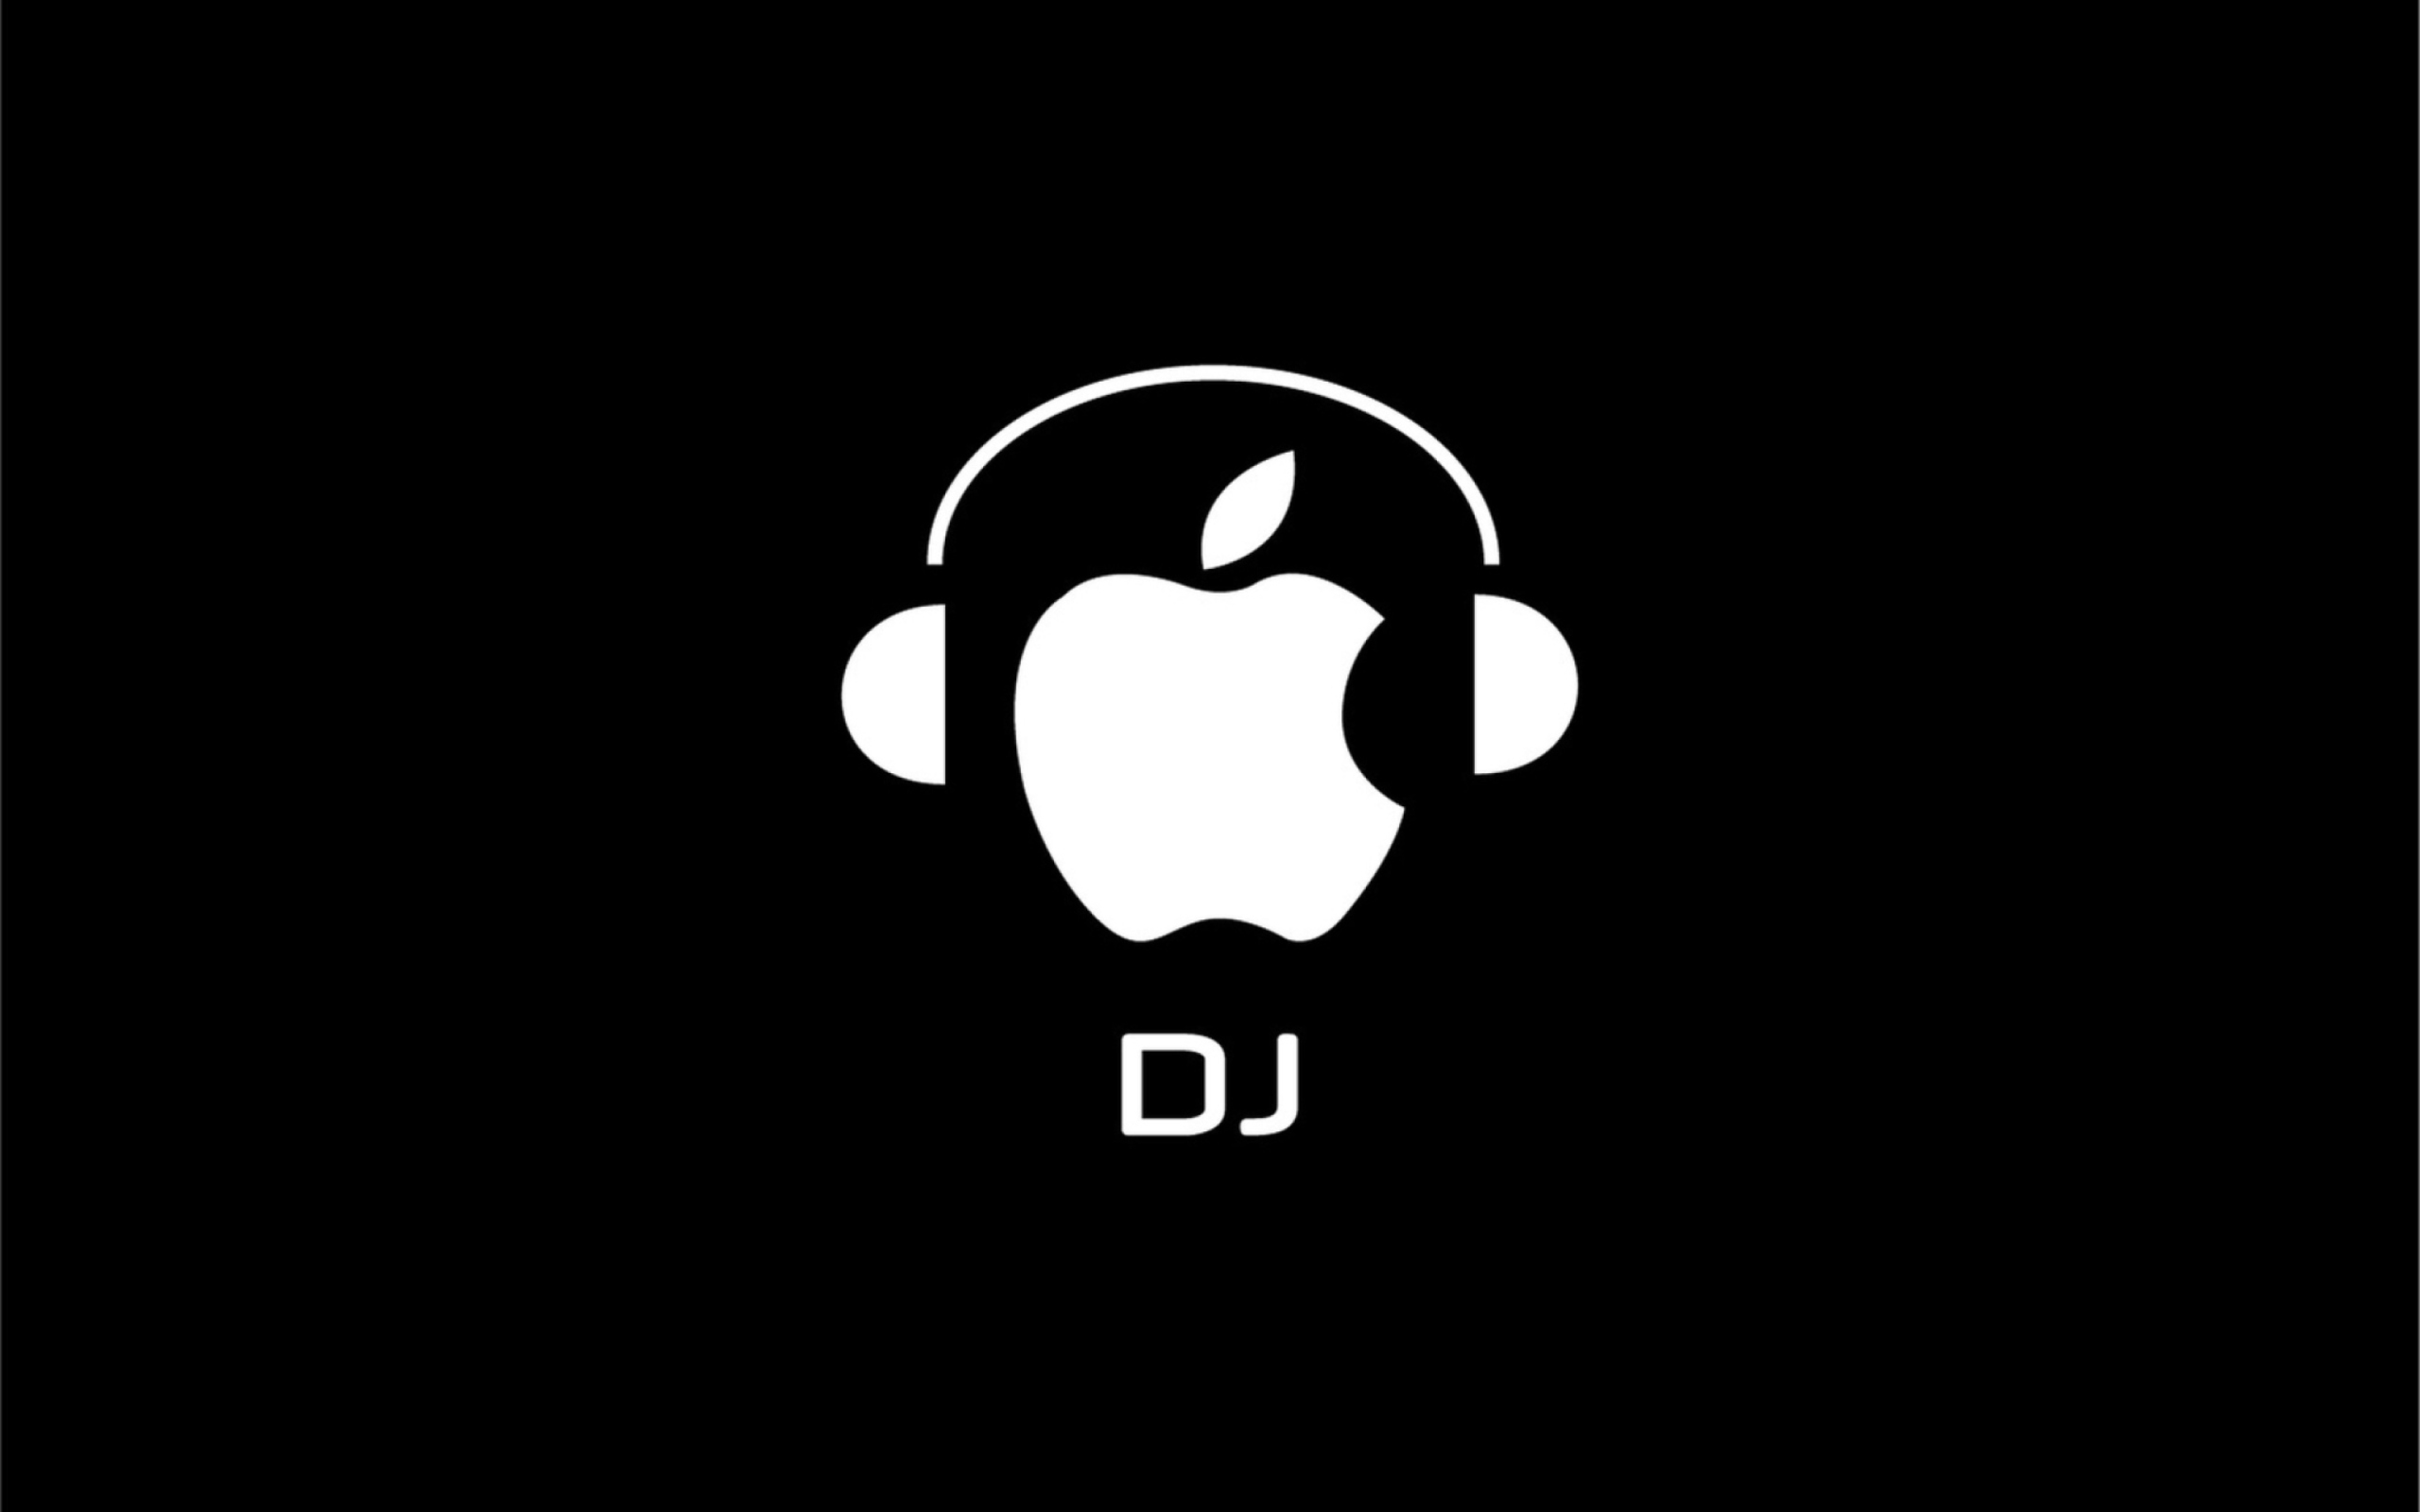 Das Apple DJ Wallpaper 2560x1600